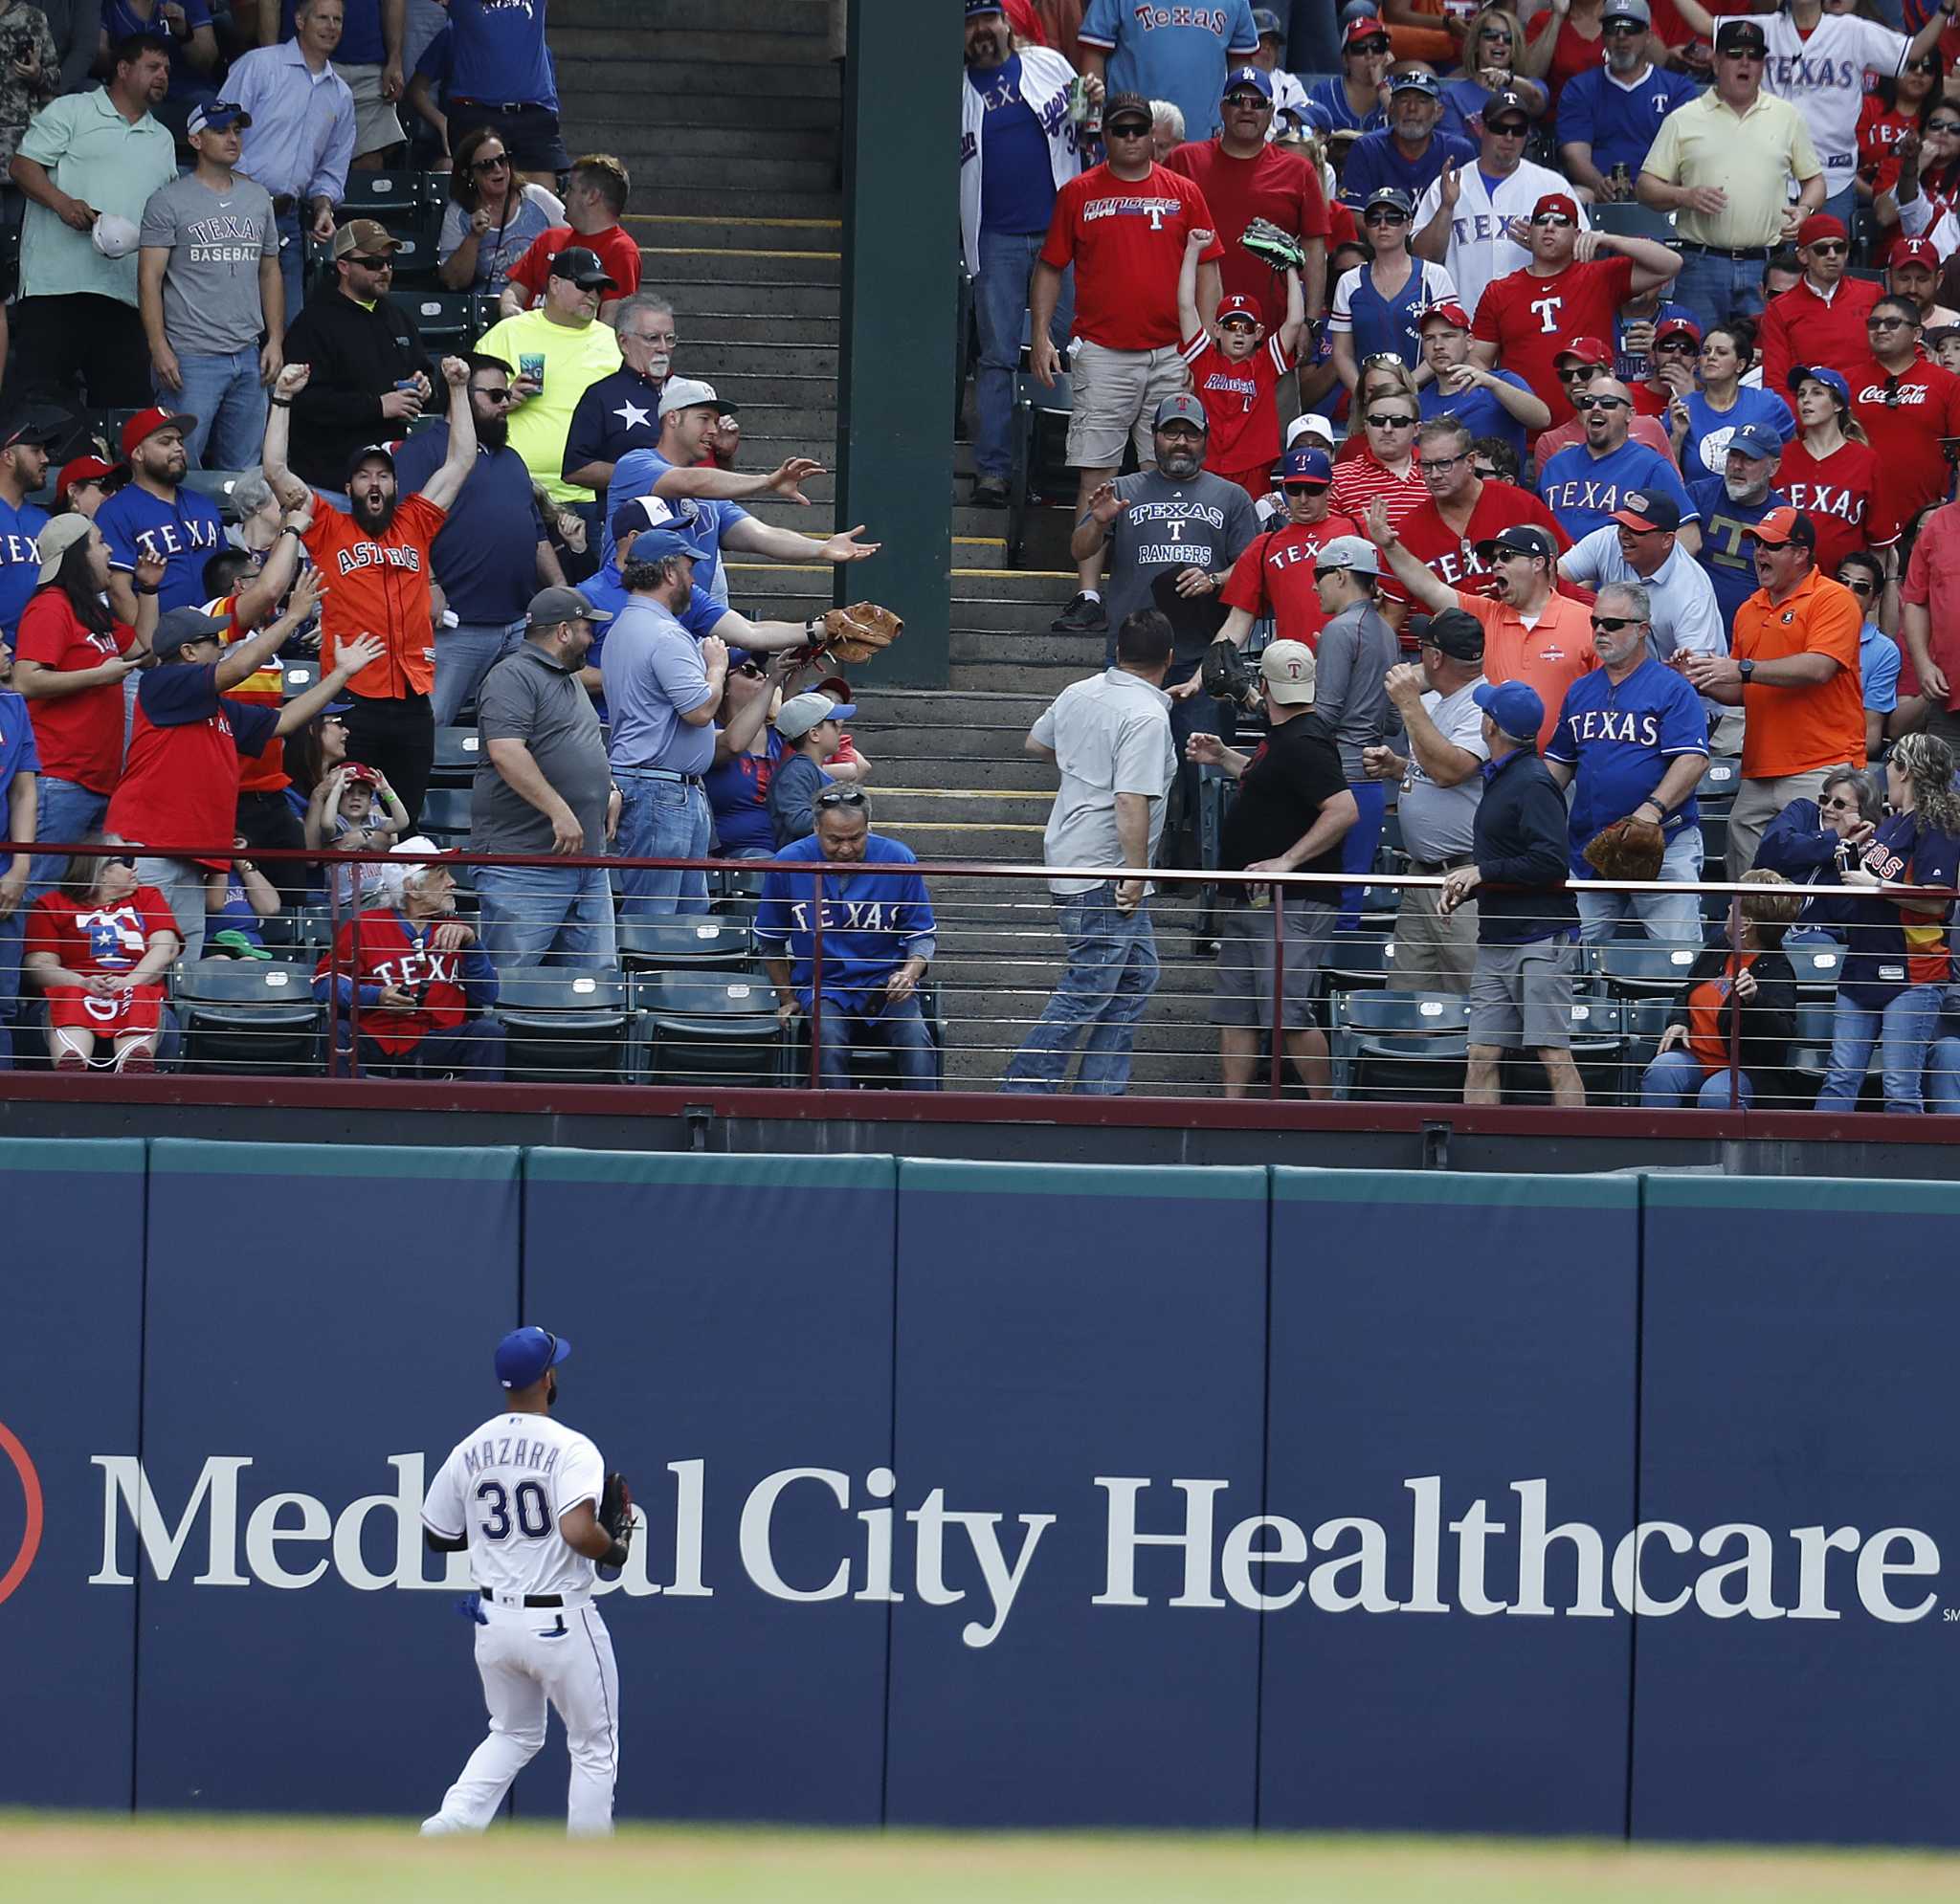 Texas Rangers shortstop Elvis Andrus (1) leaps over Houston Astros